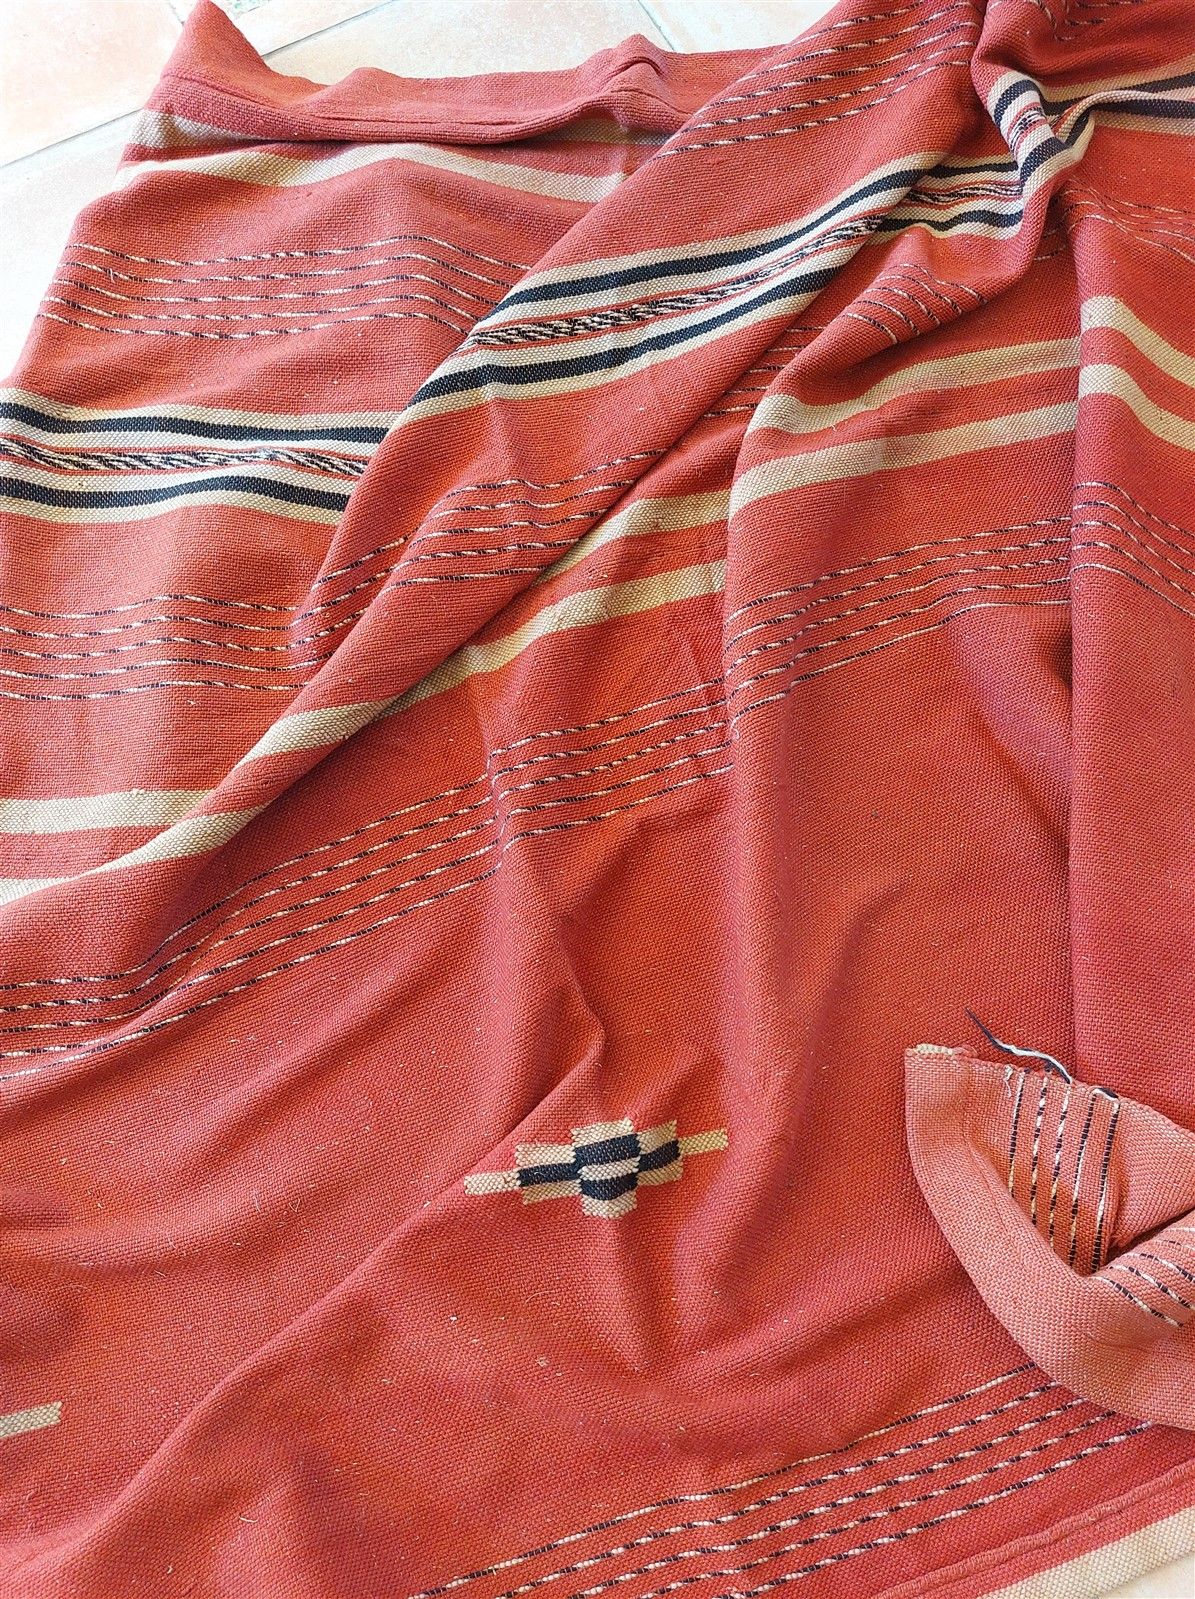 Null 1 antique red Tuareg hand-woven blanket